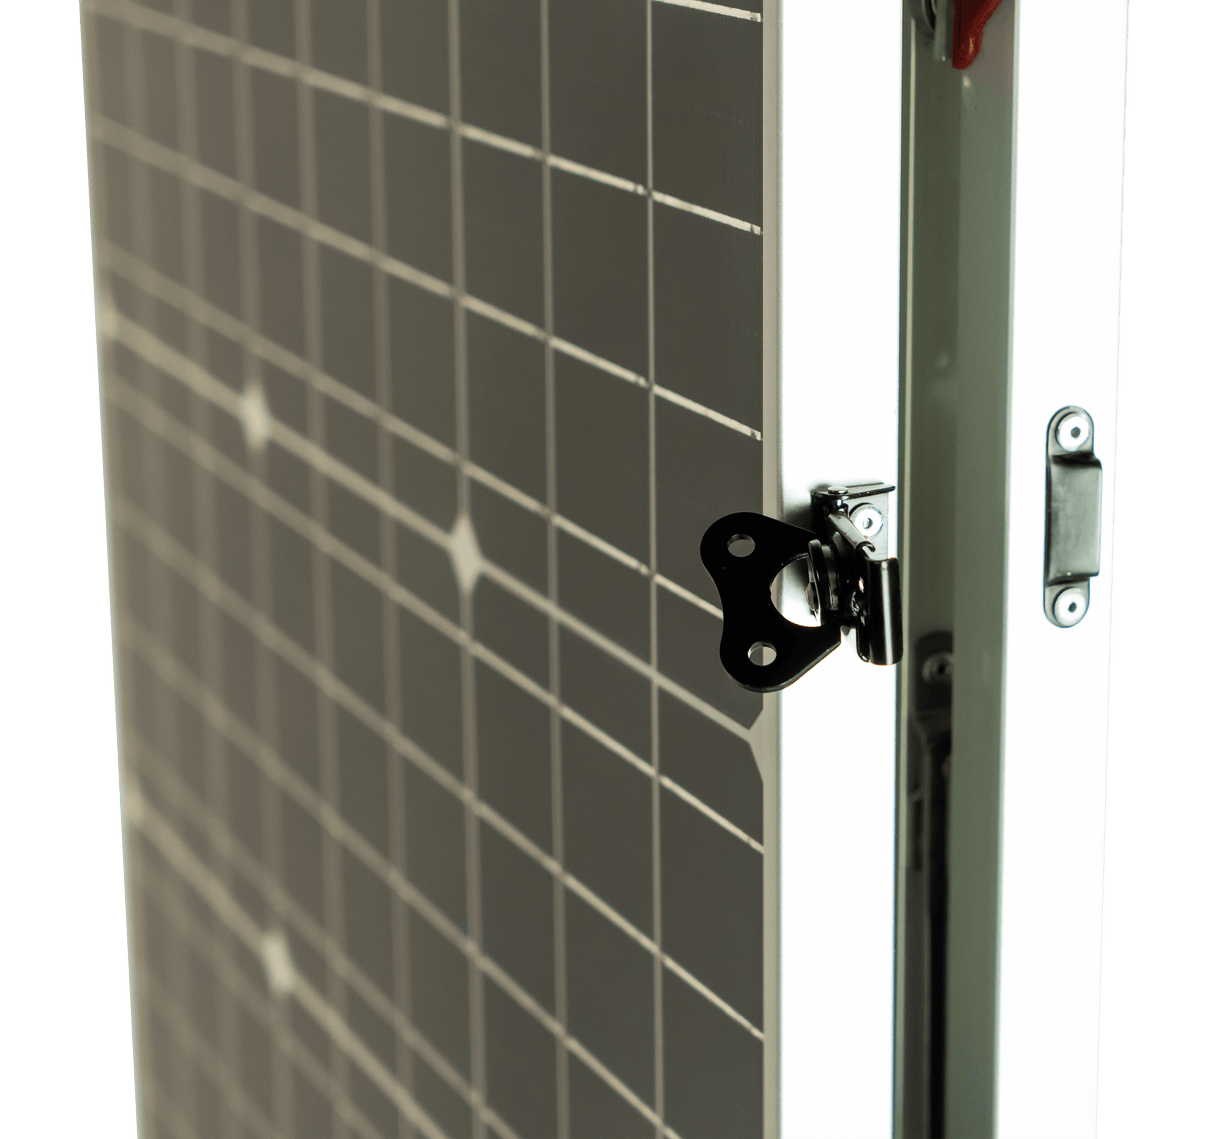 Lion Energy 100W 12V Solar Panel 50170061 - LE-50170061 - Avanquil